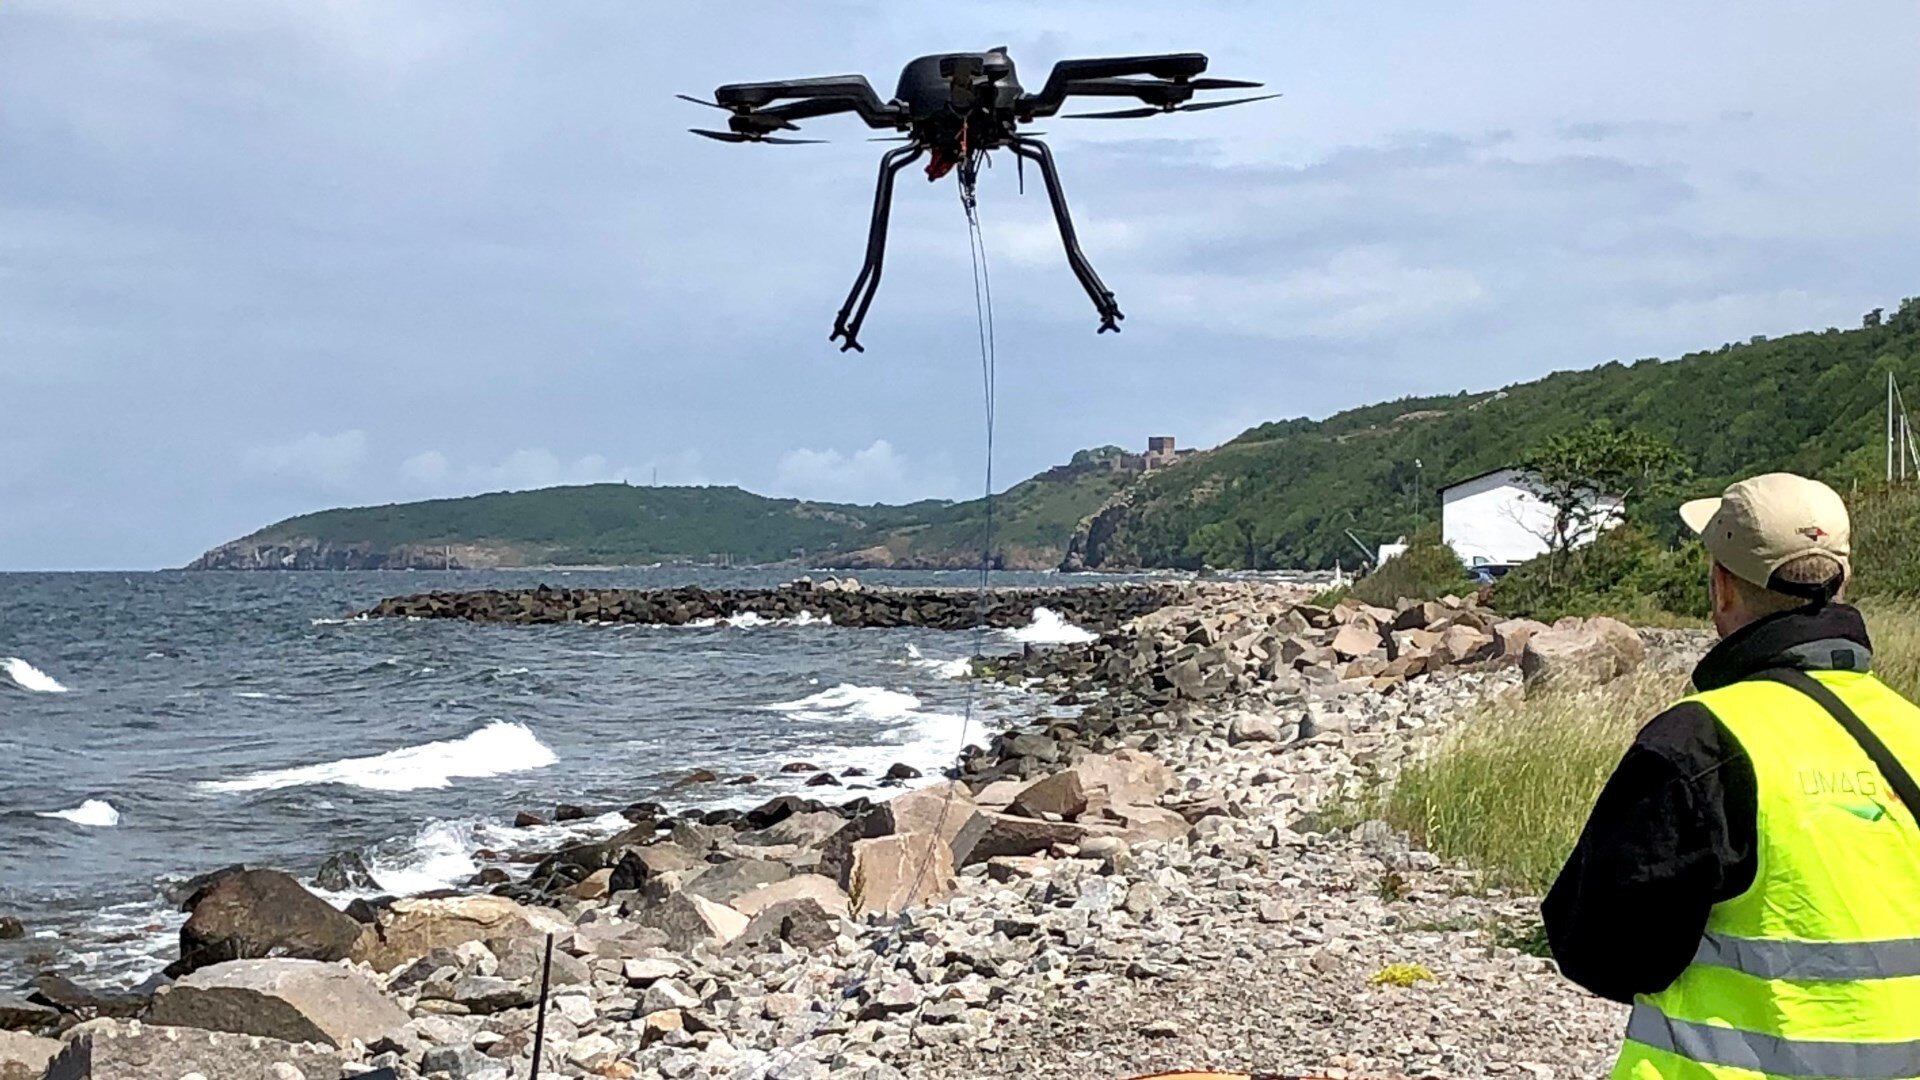 #Advanced drone technology streamlining mine clearance